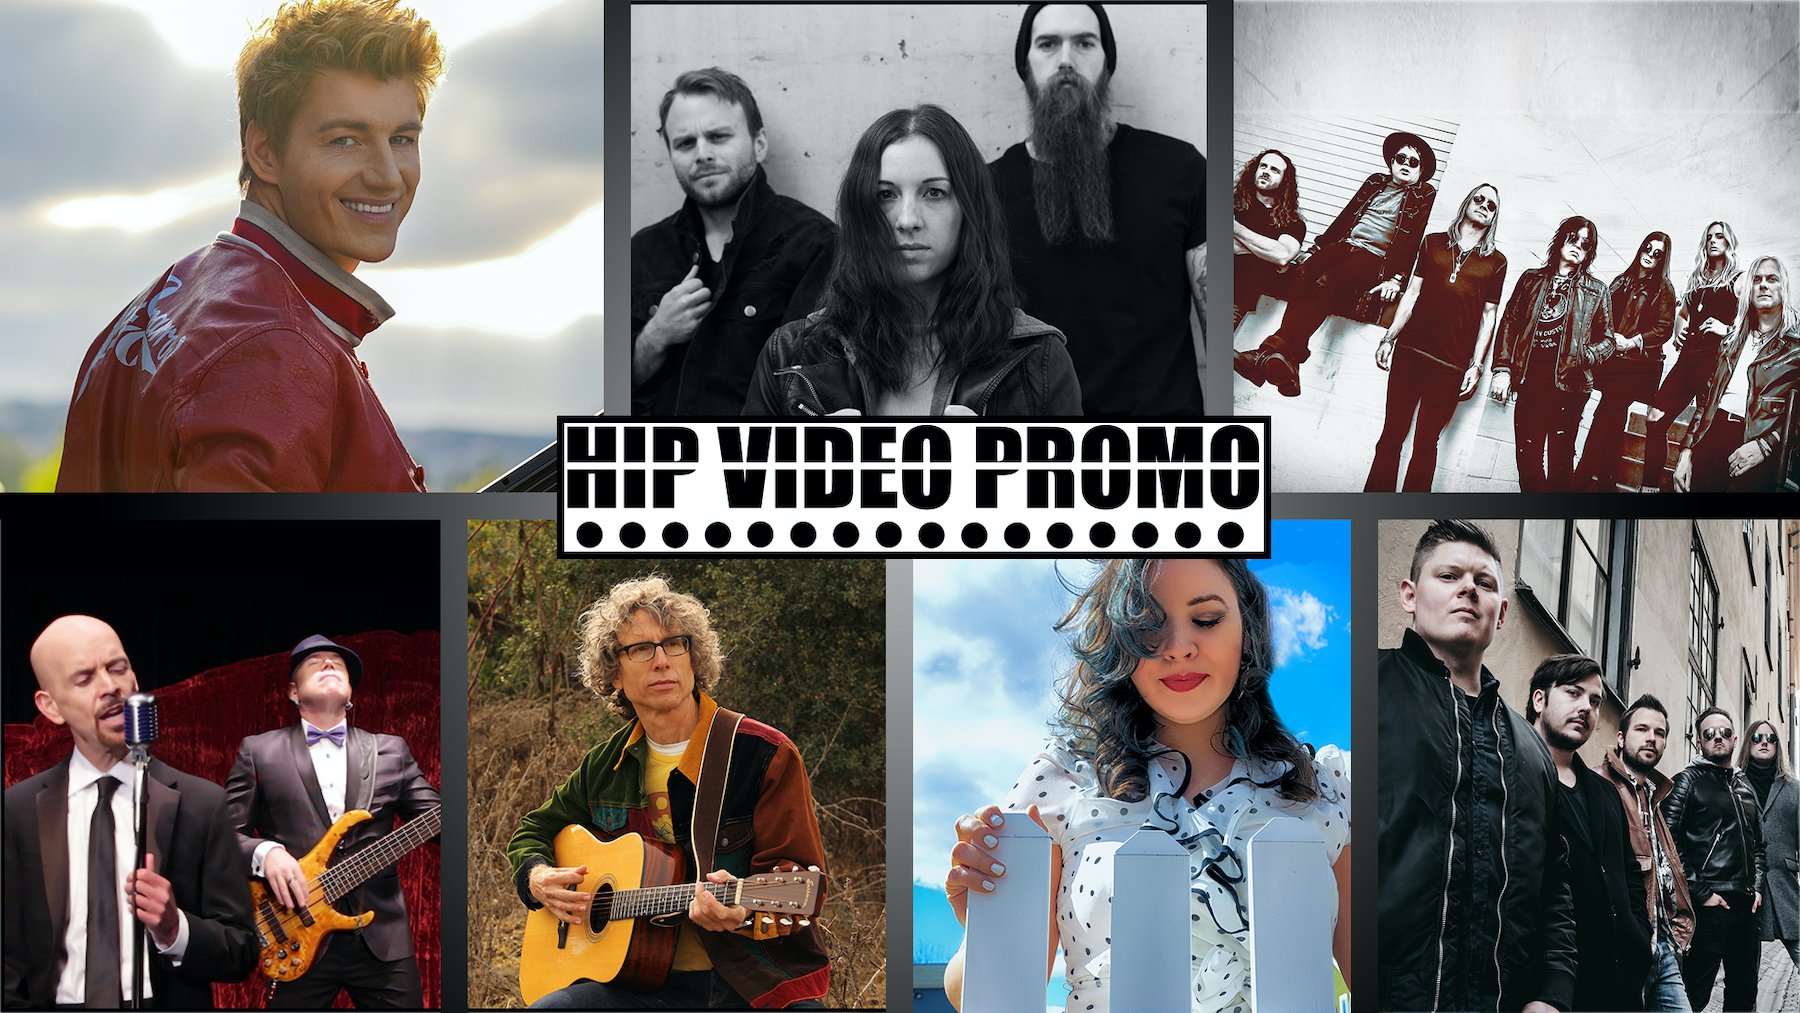 HIP Video Promo - weekly recap 4/30/20